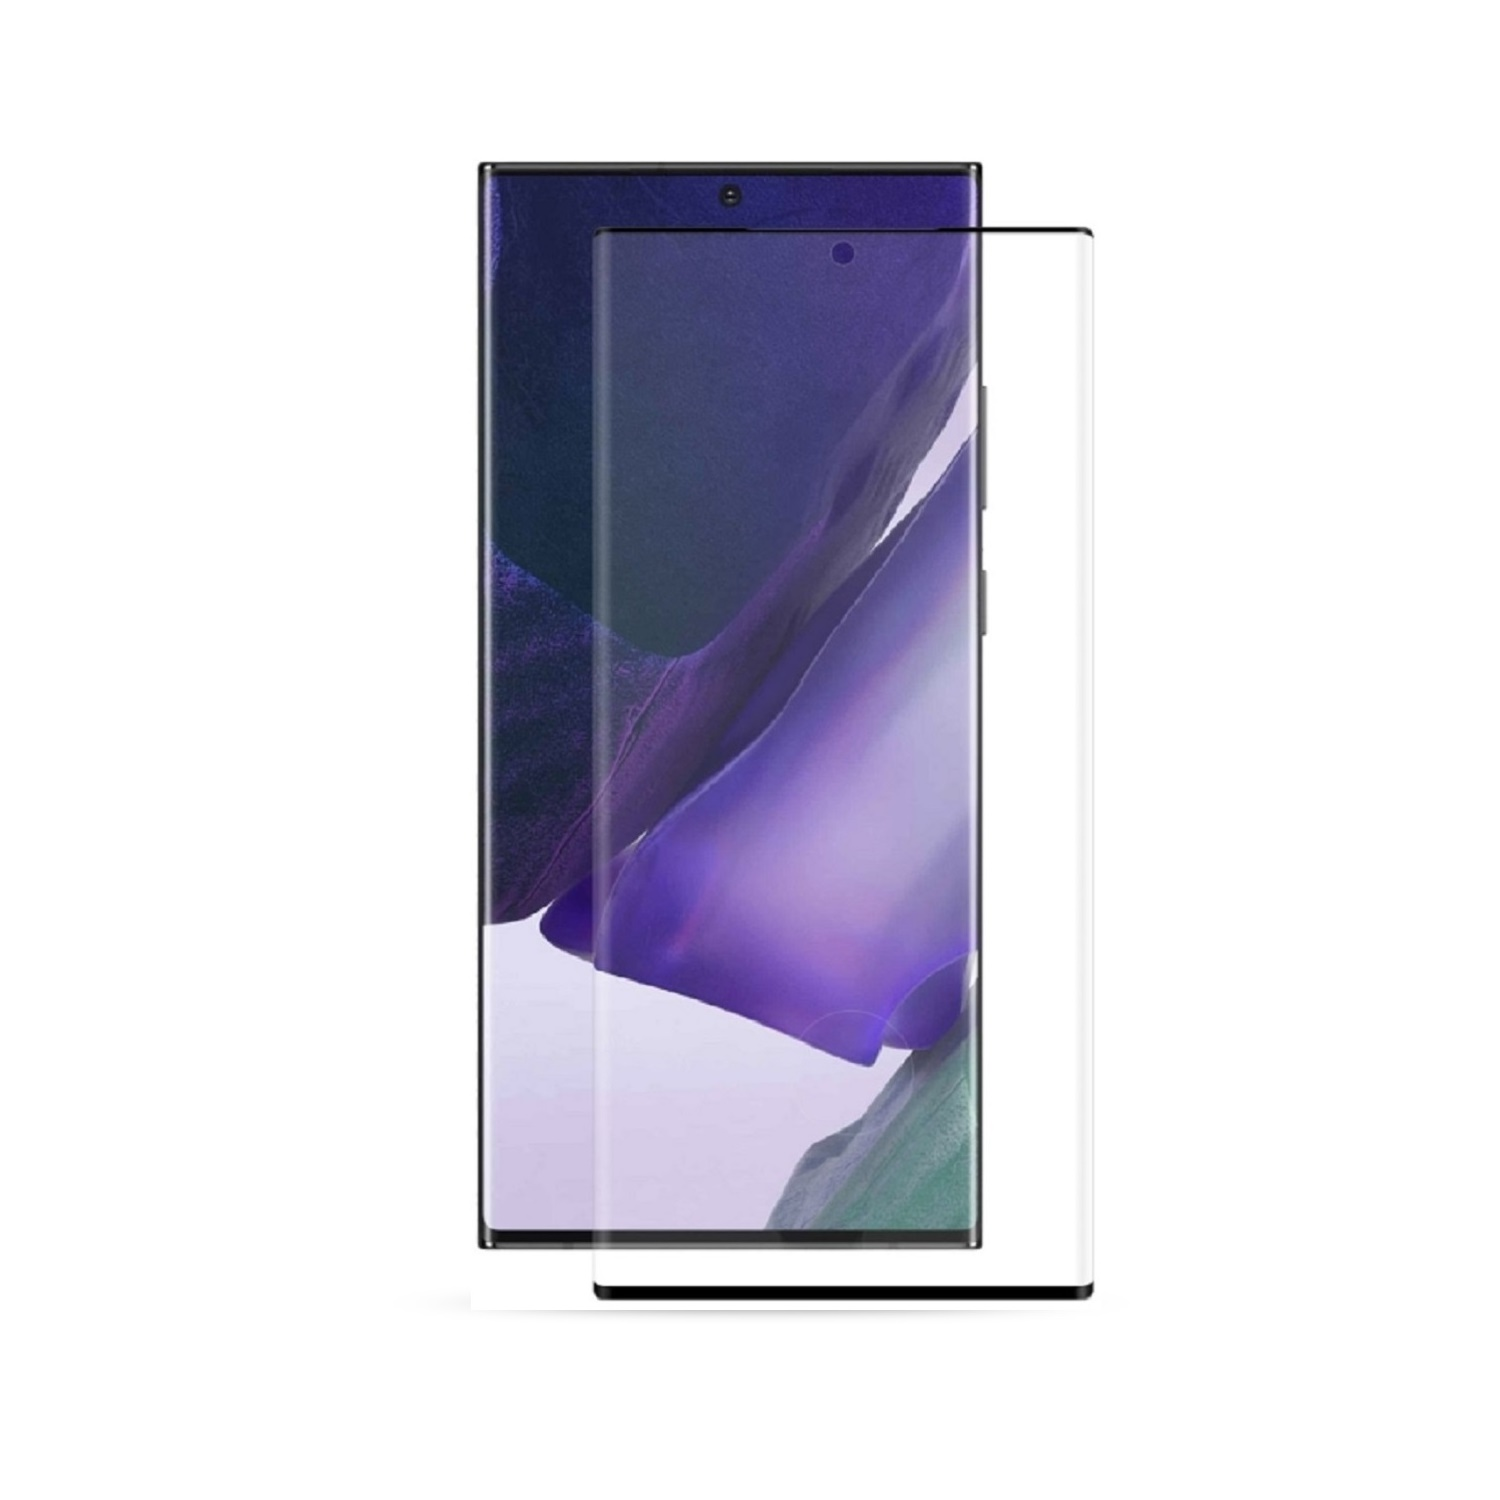 PROTECTORKING 3x HD Galaxy Hartglas CURVED Ultra) Samsung KLAR Note 9H 20 FULL Displayschutzfolie(für